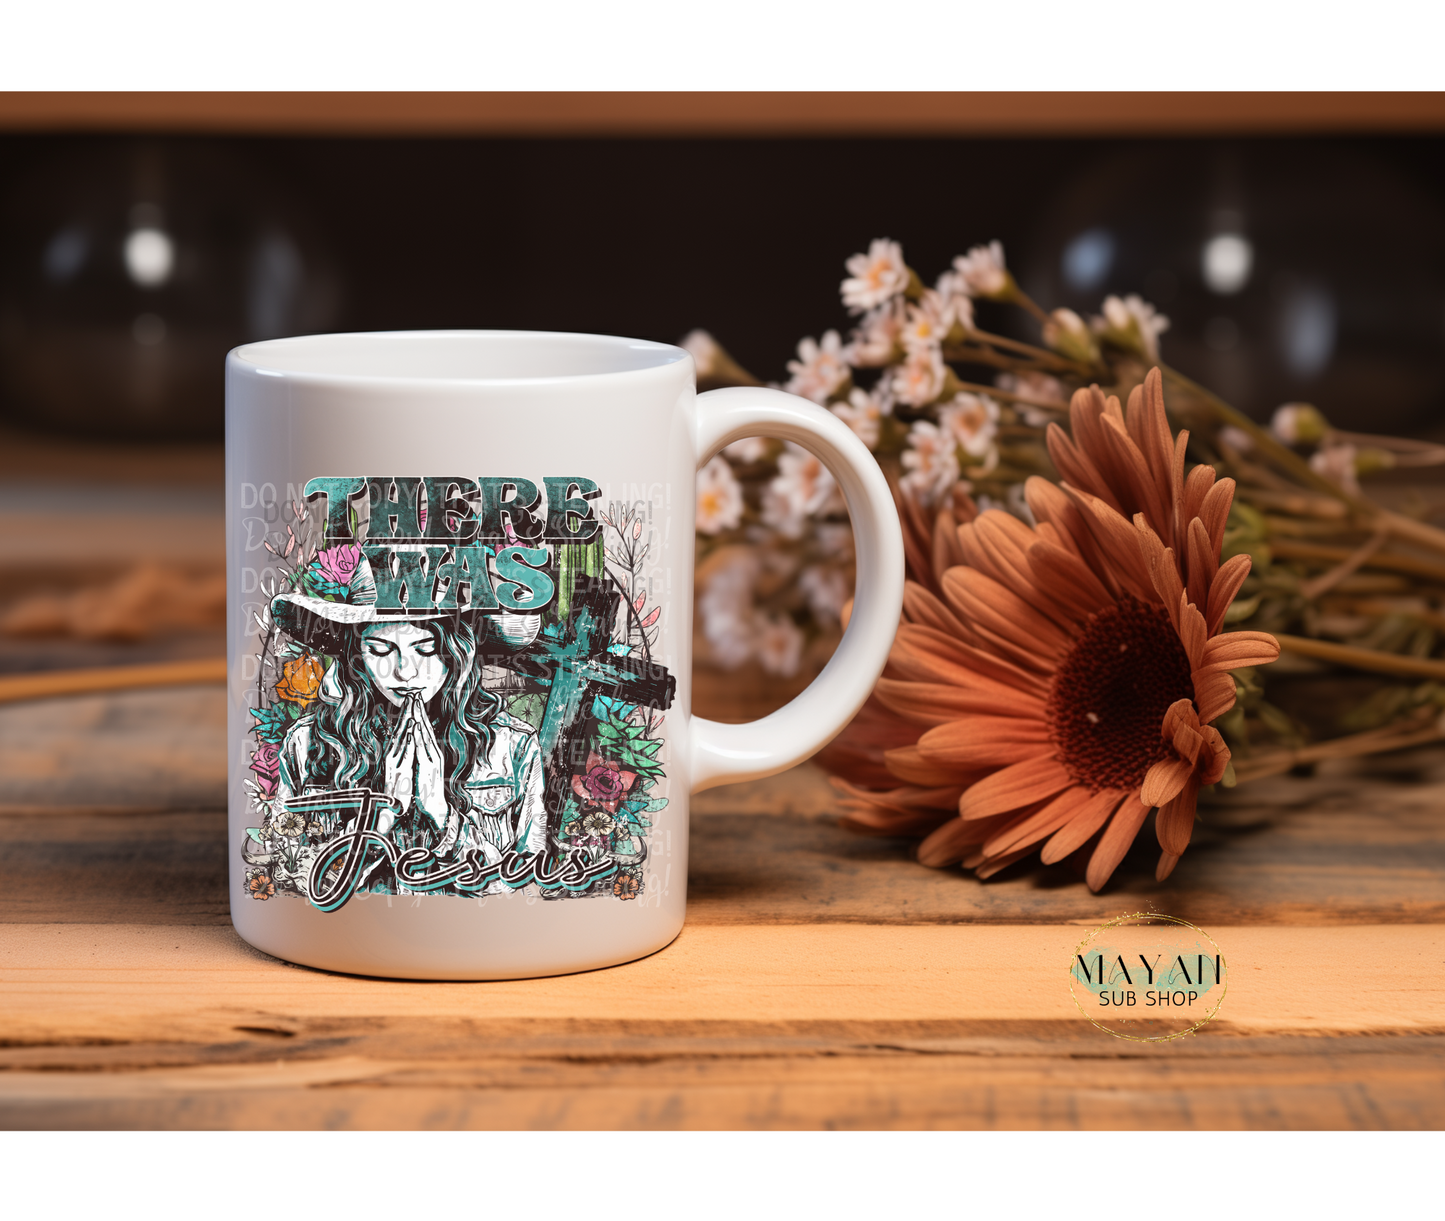 There was Jesus 15 oz. coffee mug. -Mayan Sub Shop